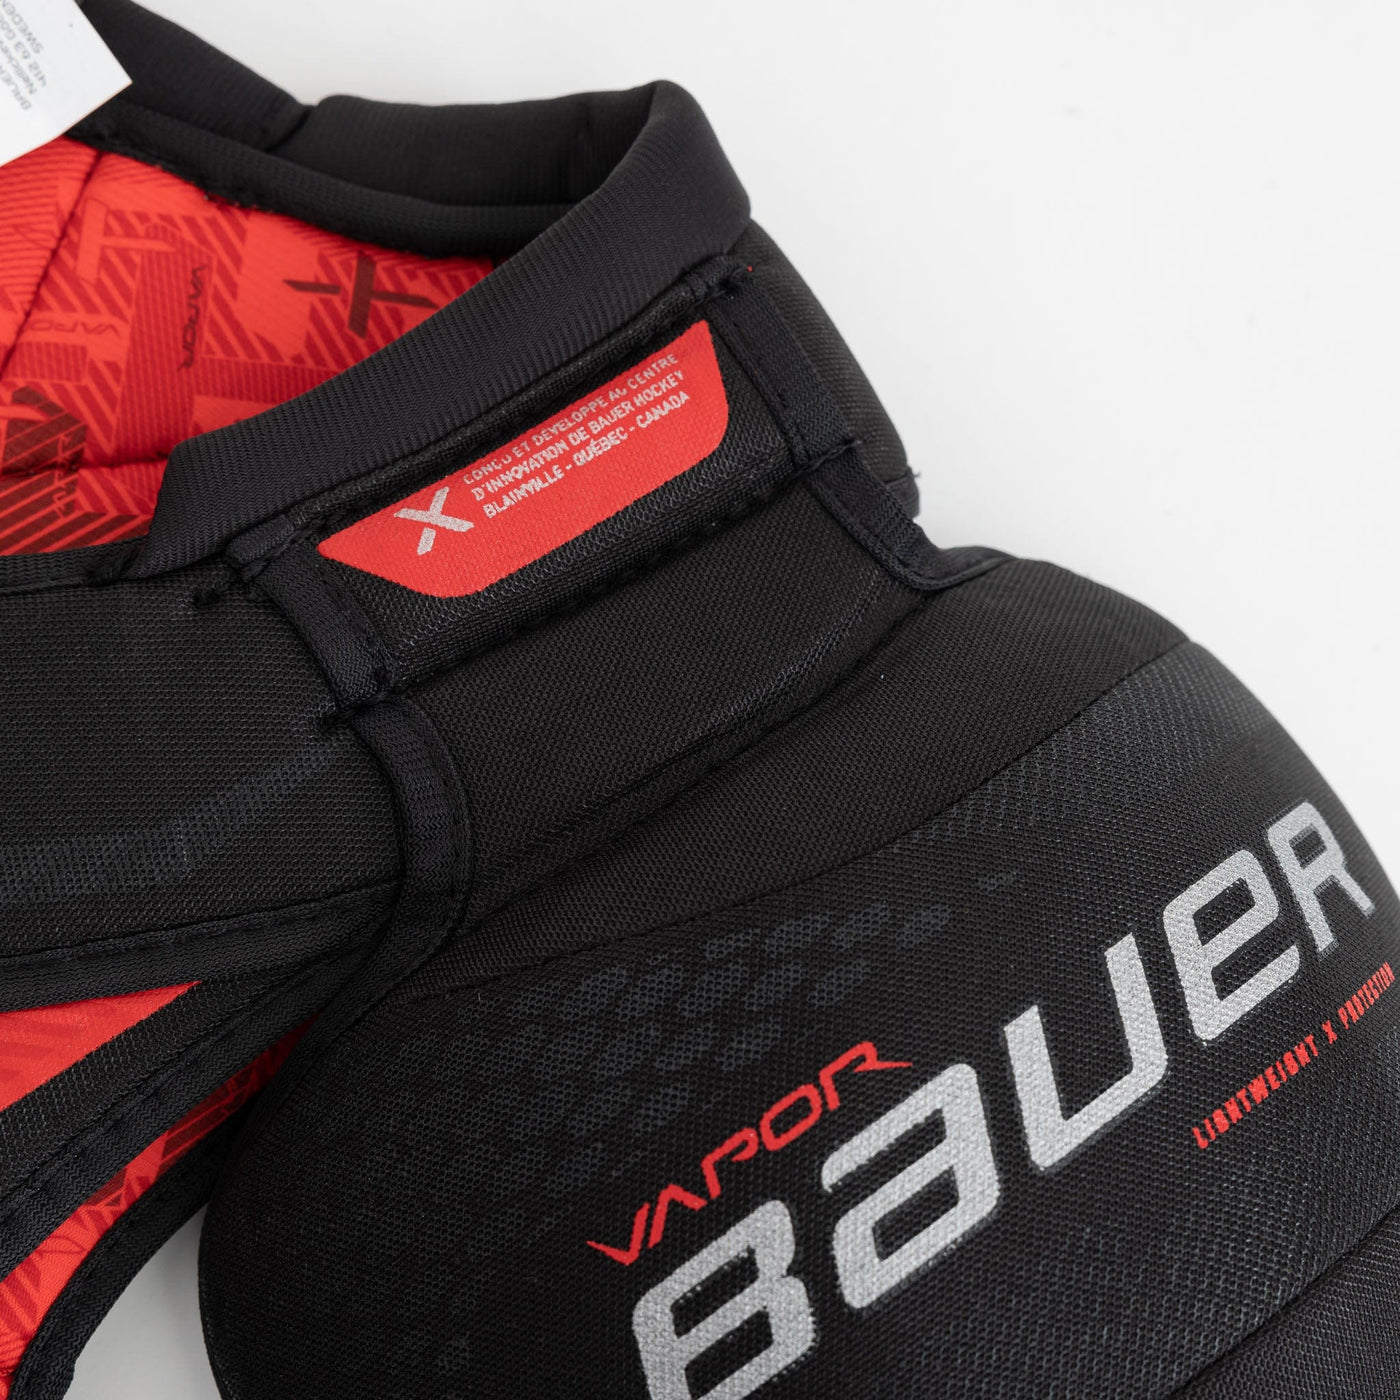 Bauer Vapor Velocity Senior Hockey Shoulder Pads - The Hockey Shop Source For Sports